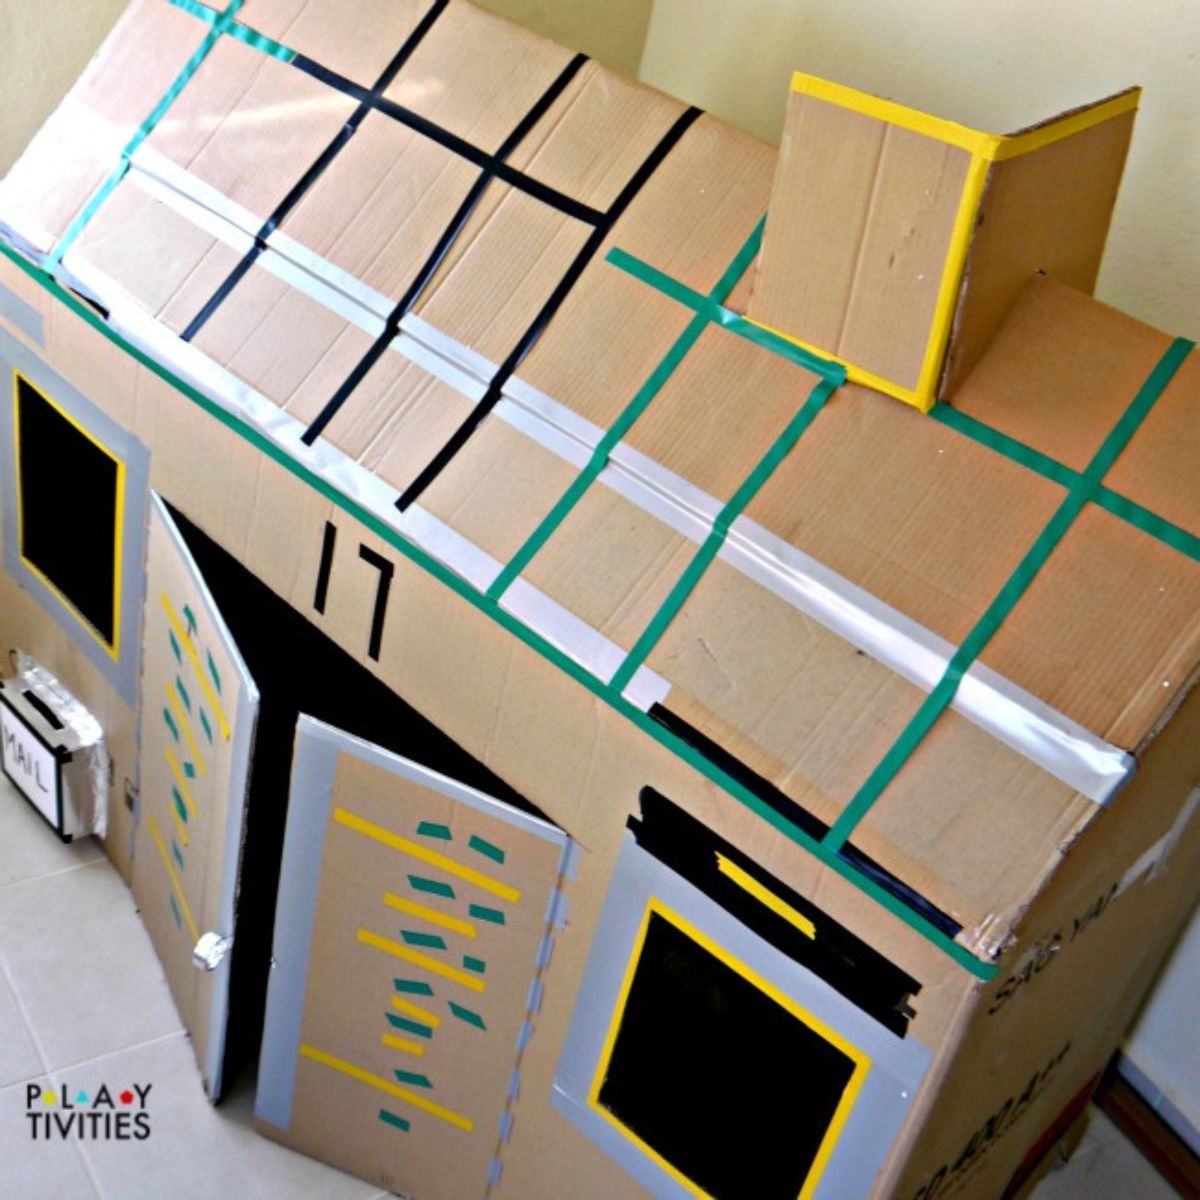 simple cardboard house model